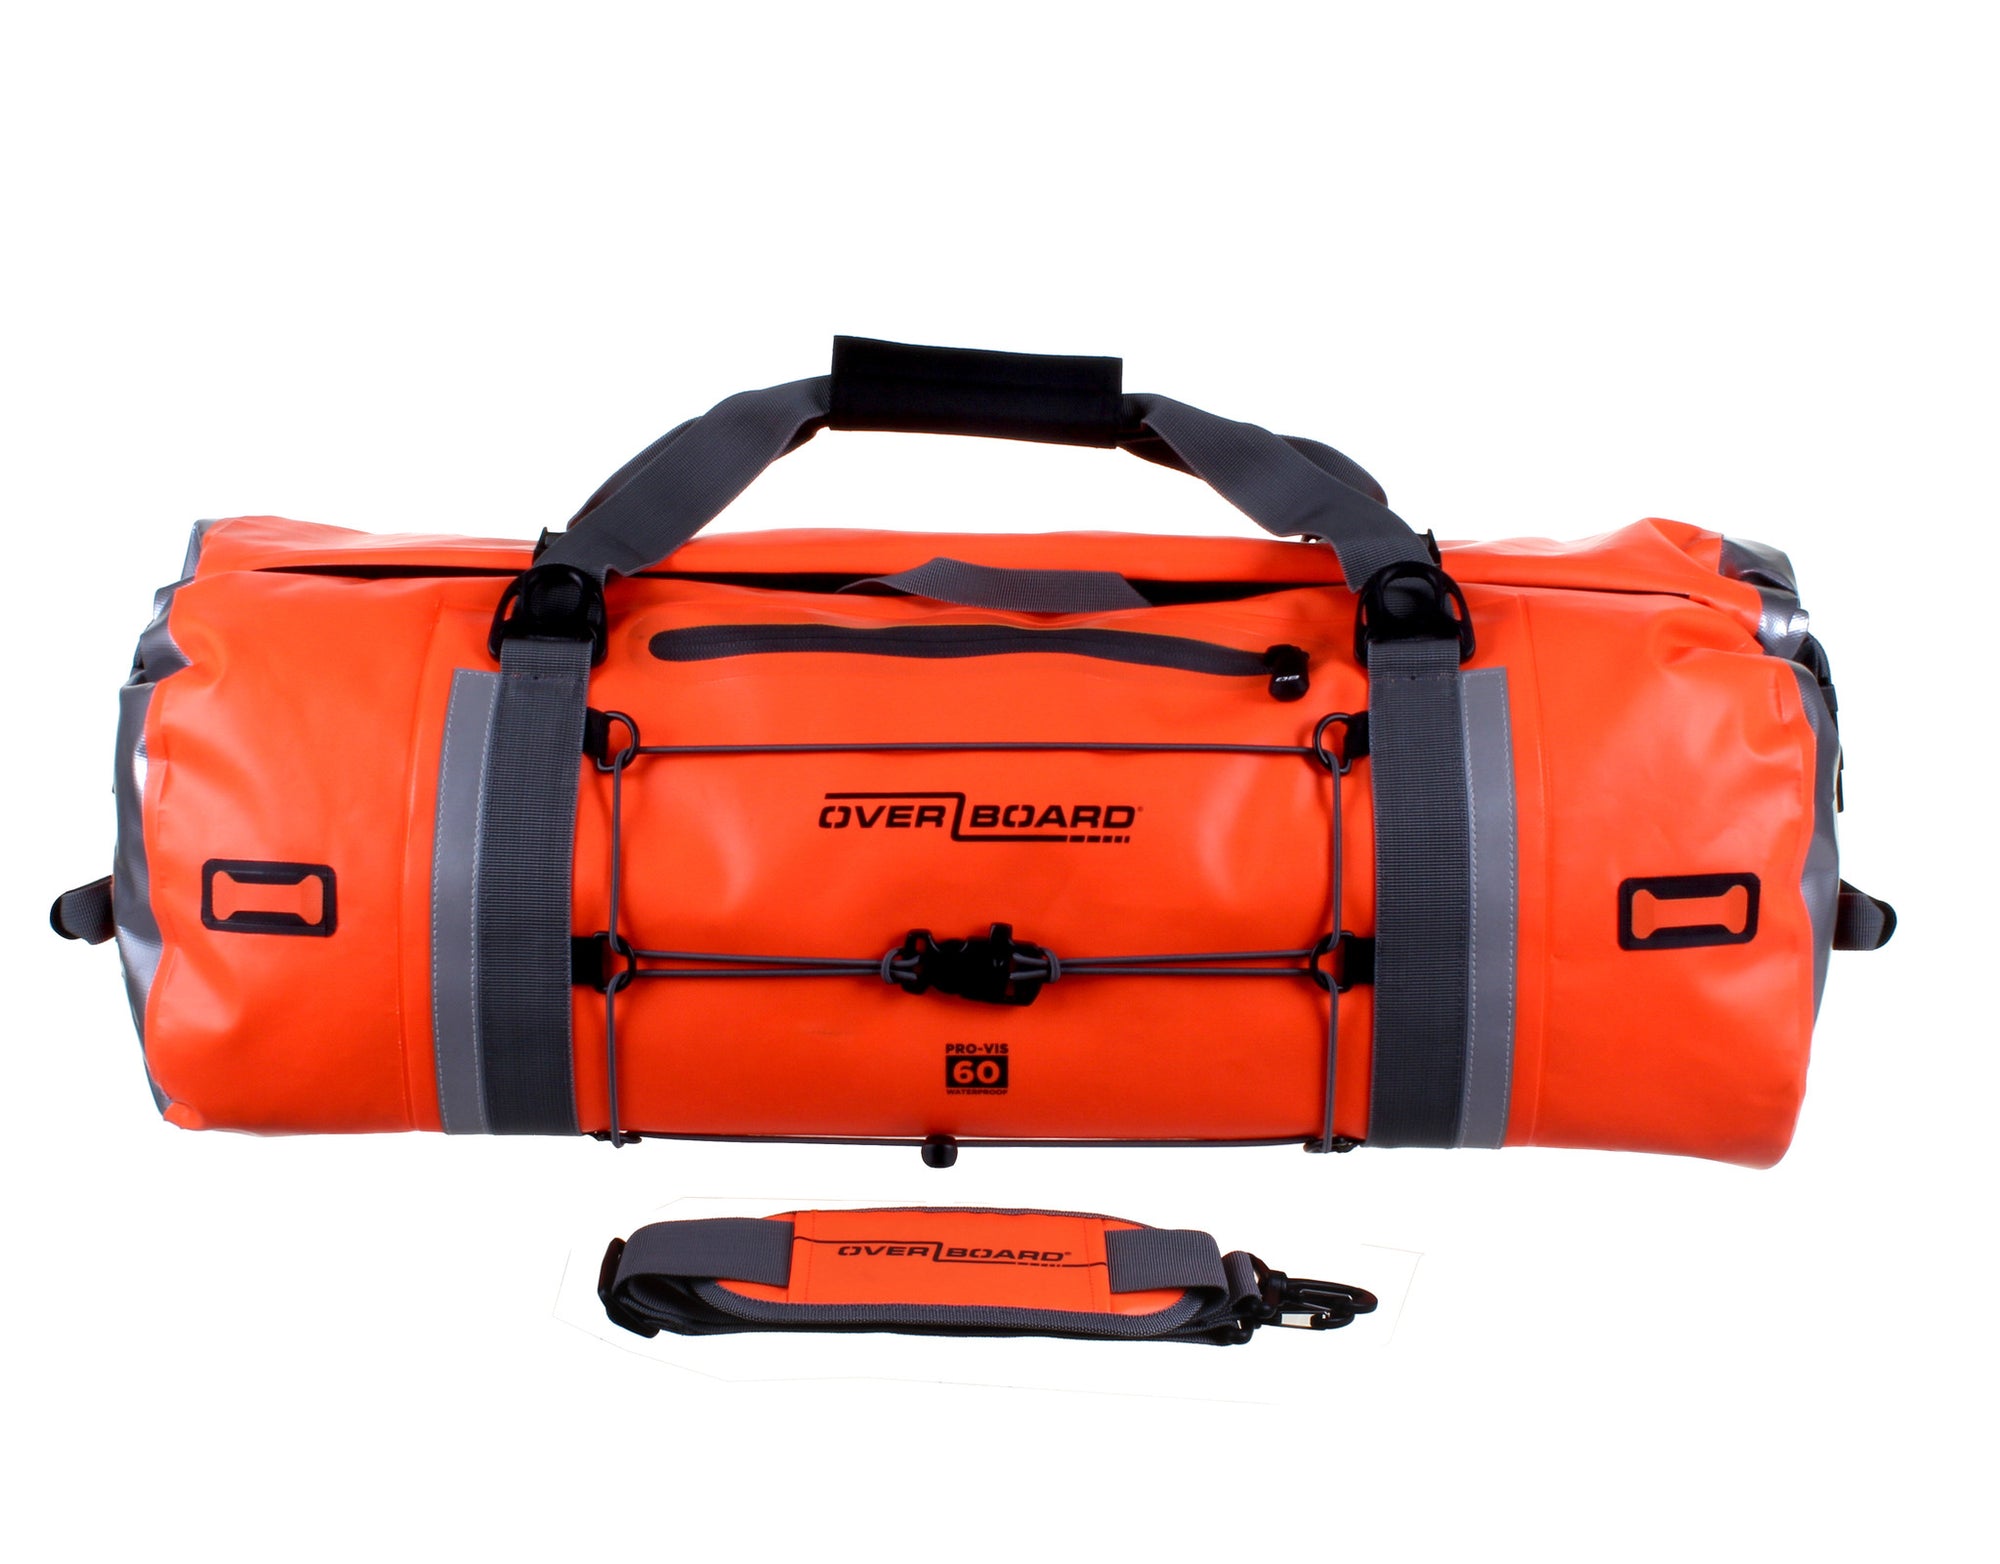 OverBoard-Pro-Vis Waterproof Duffel Bag - 60 Litre-Waterproof Duffel-High-Vis Orange-Gearaholic.com.sg